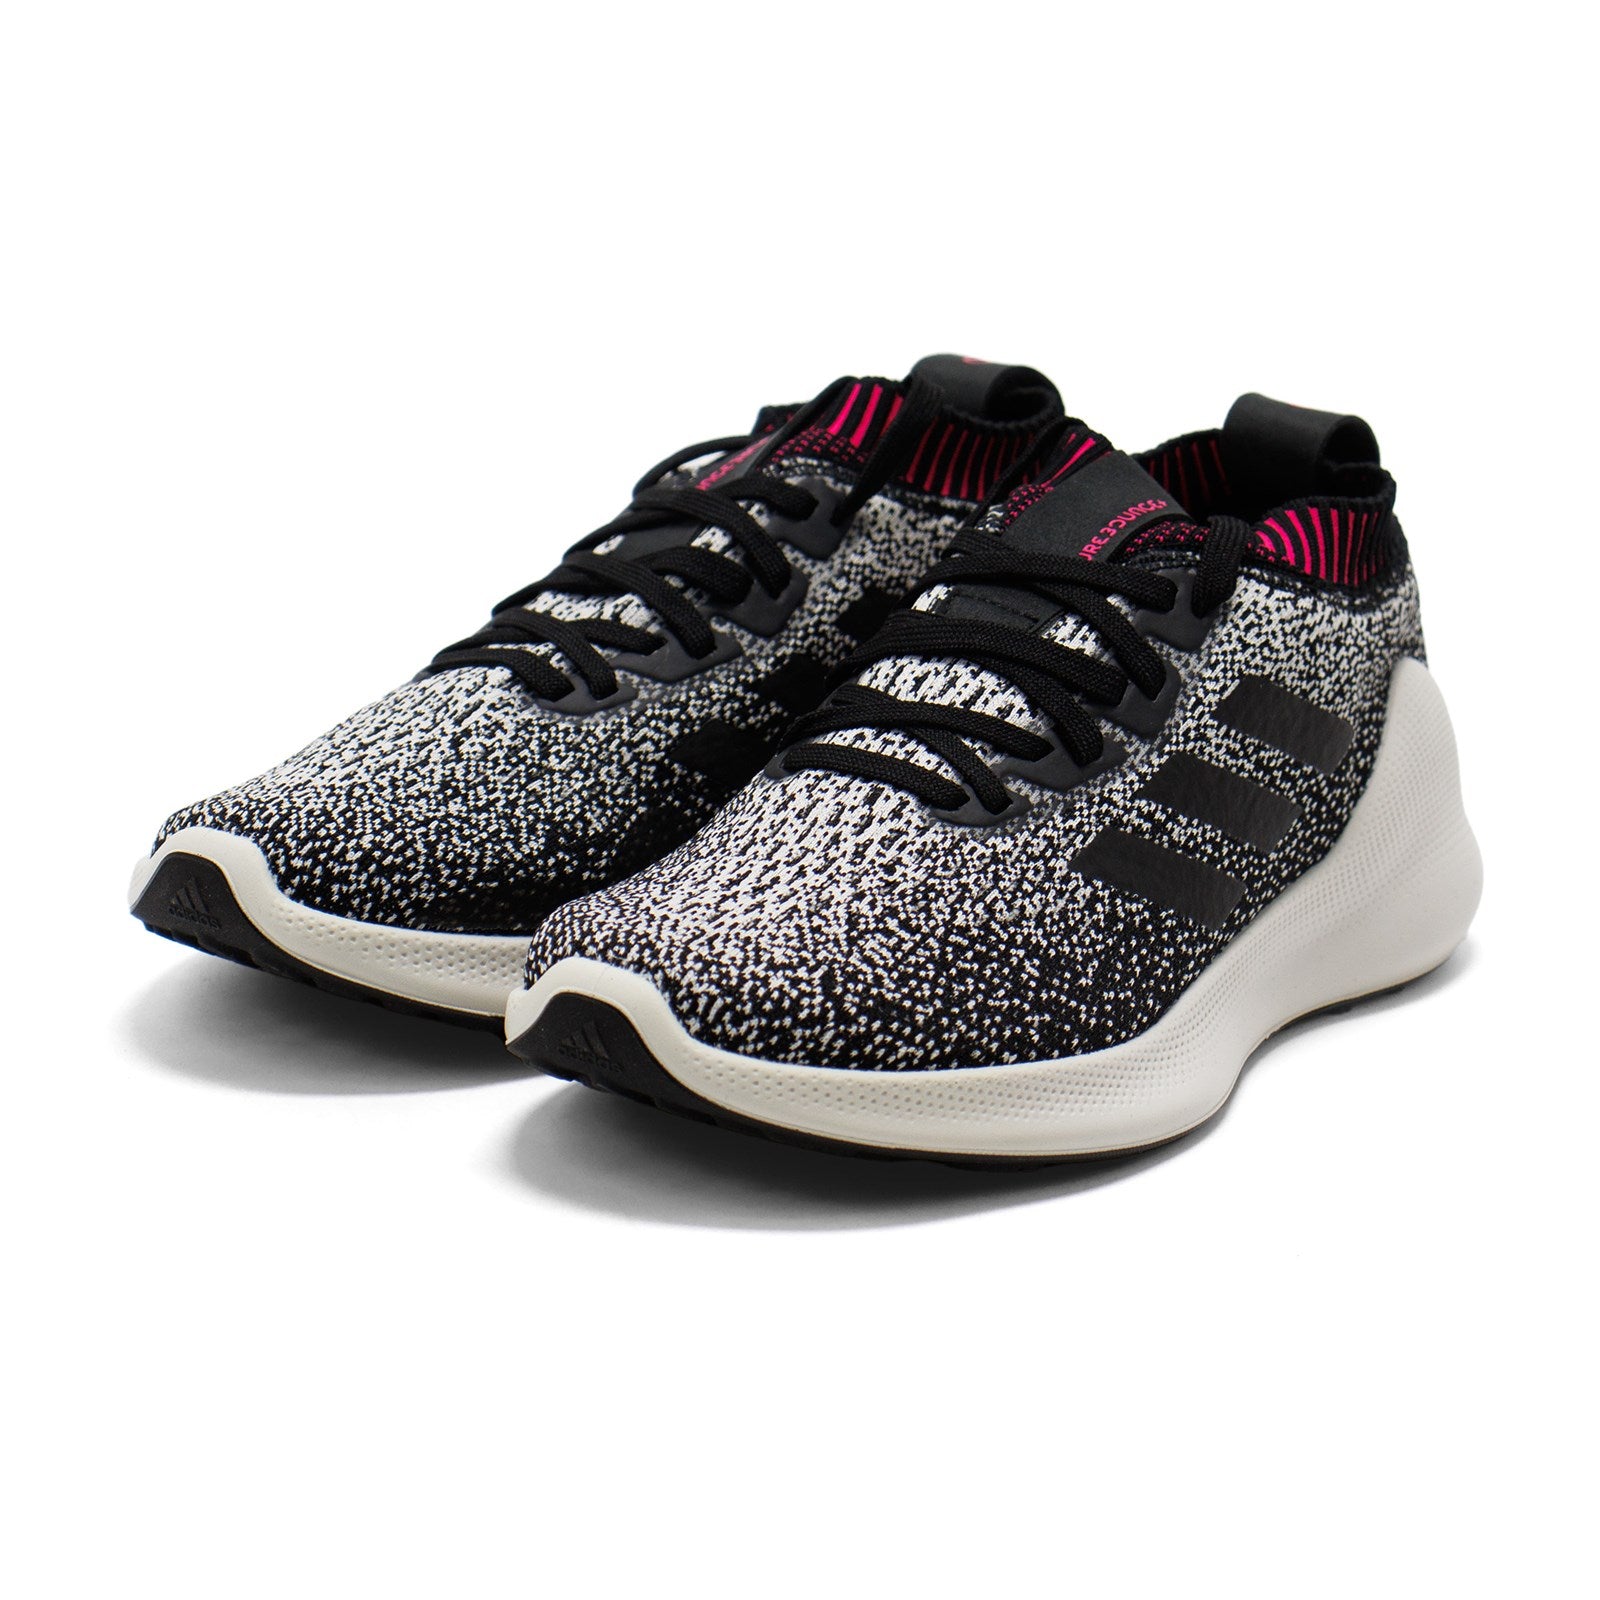 Adidas Women Purebounce+ Running Shoes